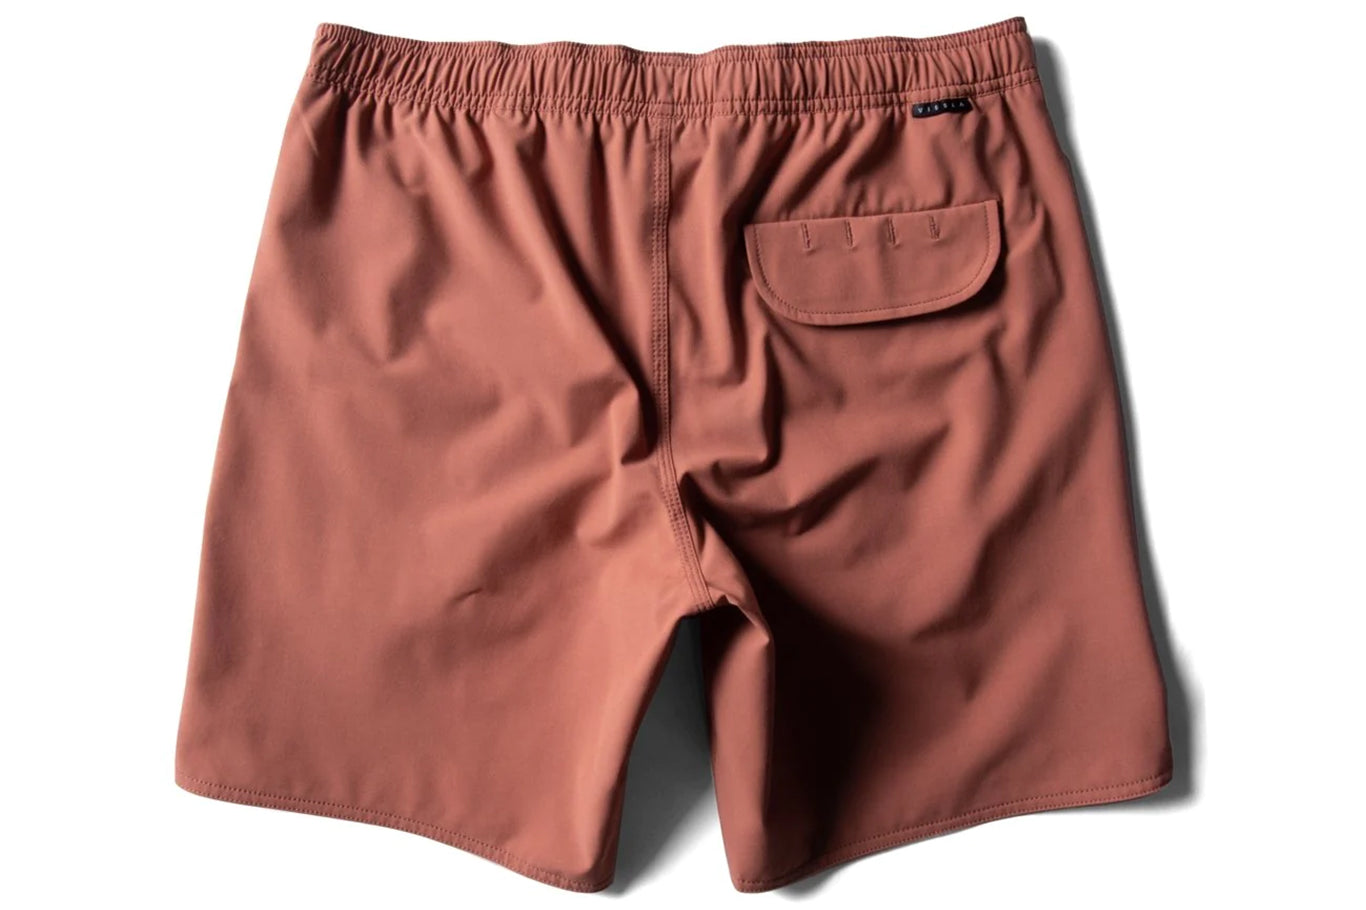 Vintage Kahala Red Corduroy Shorts Men's 36x9